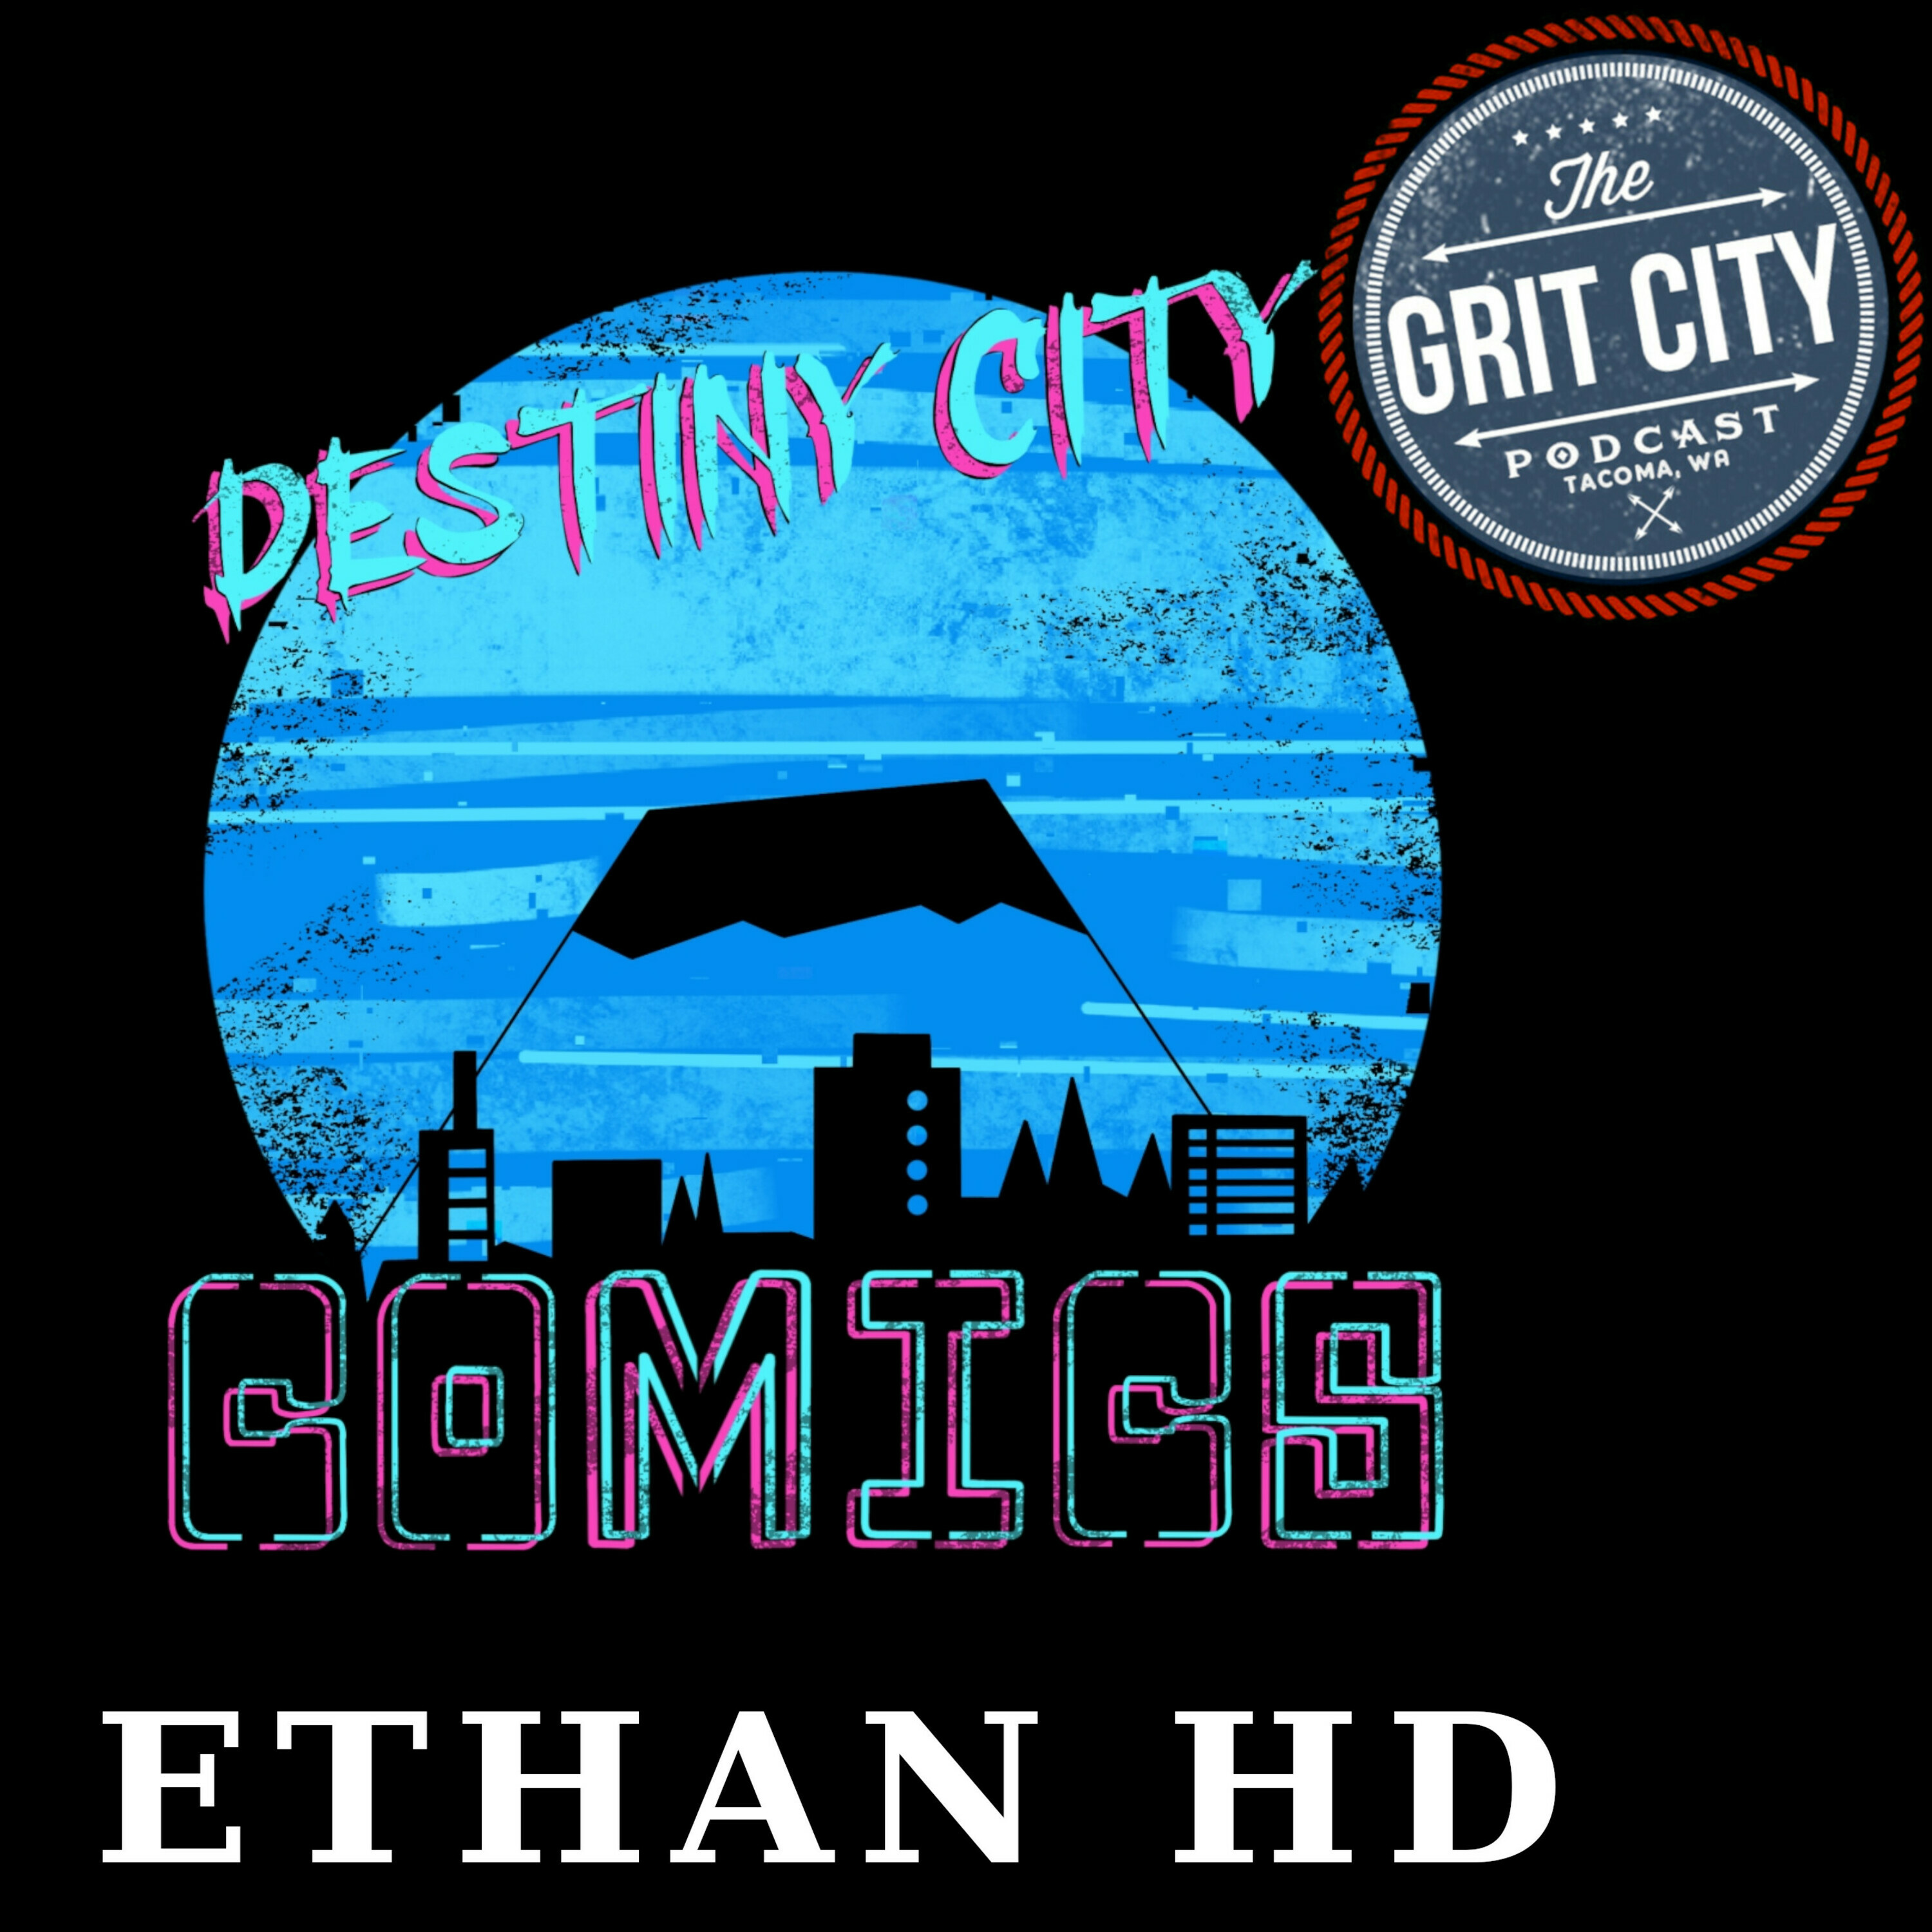 Destiny City Comics with ETHAN HD